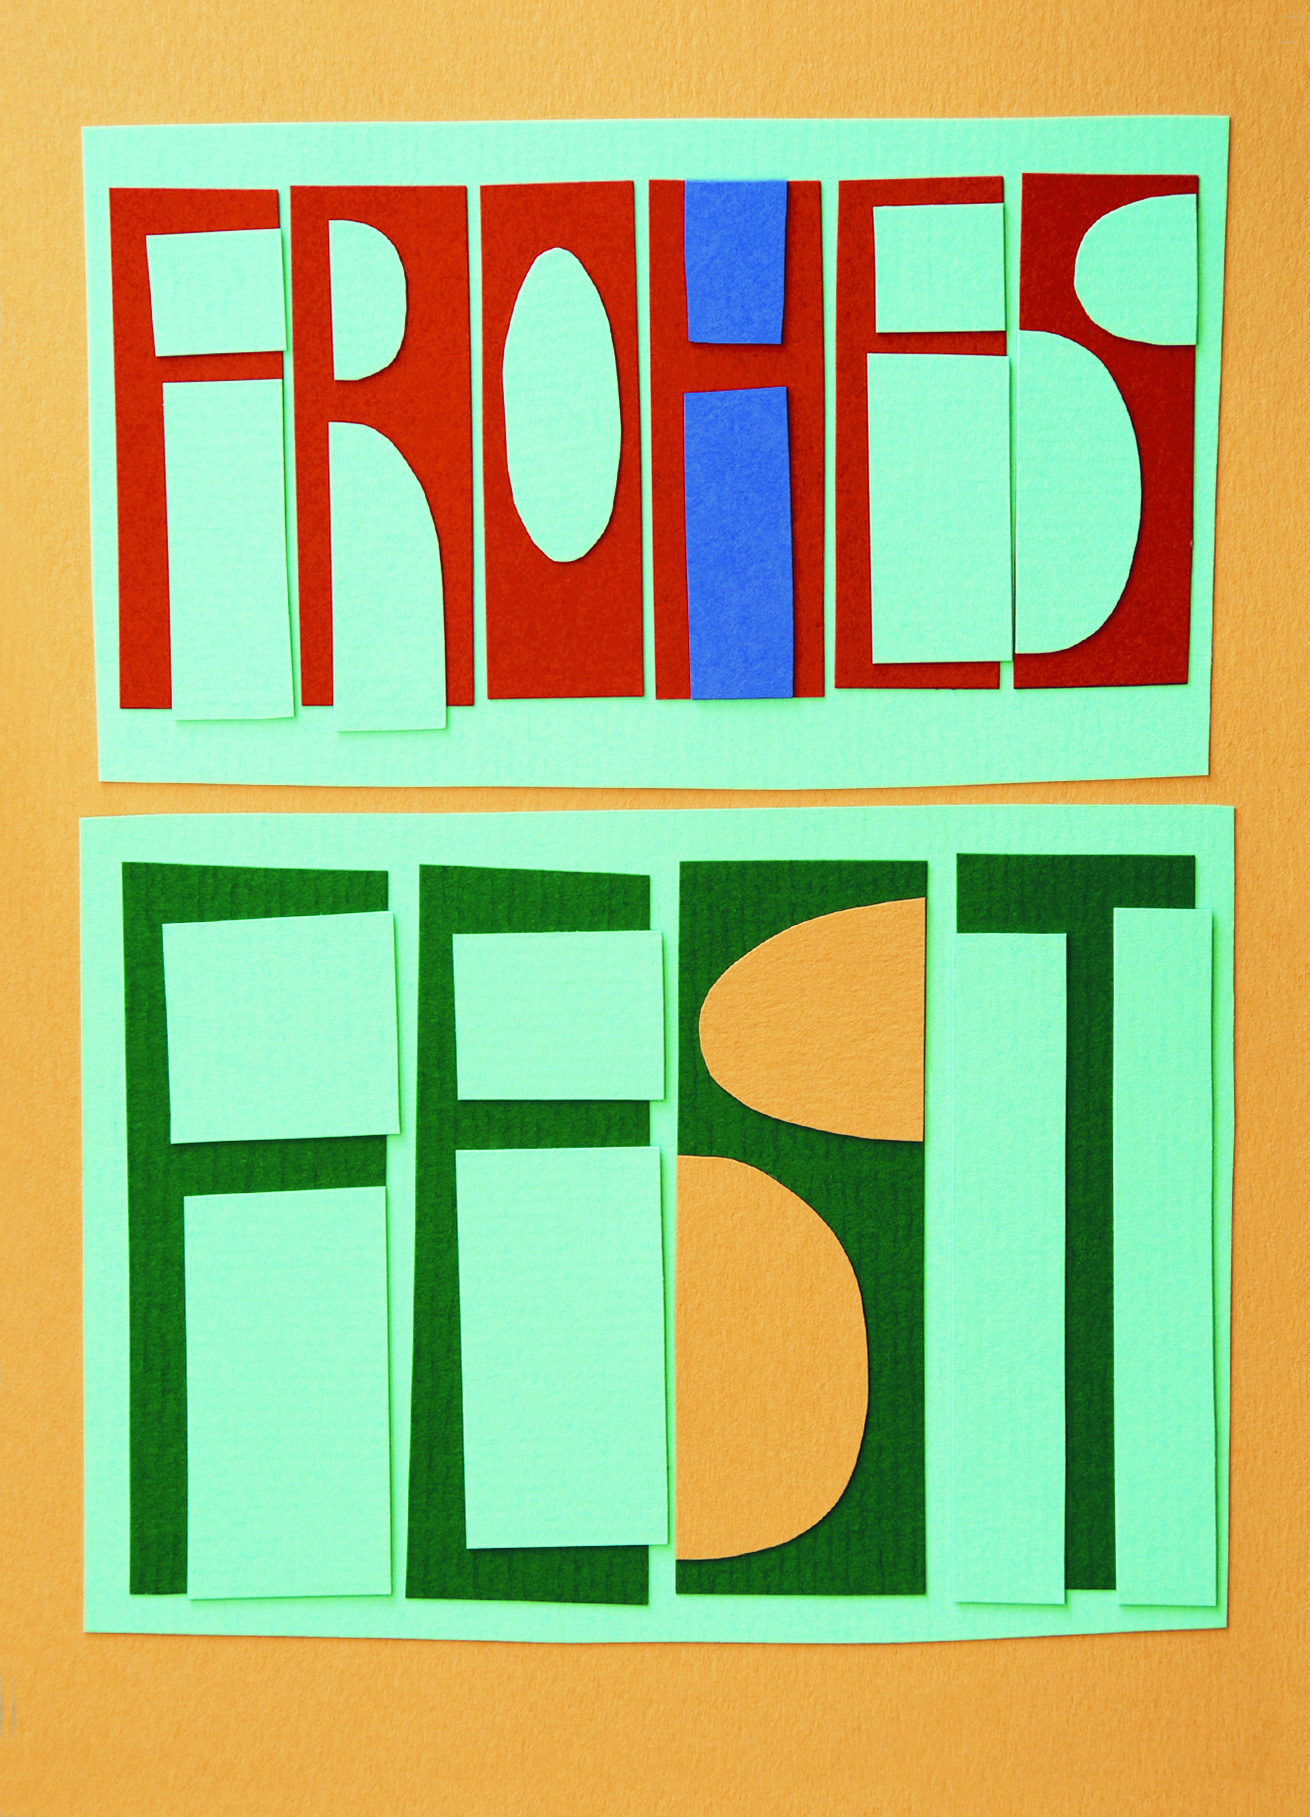 FrohesFest